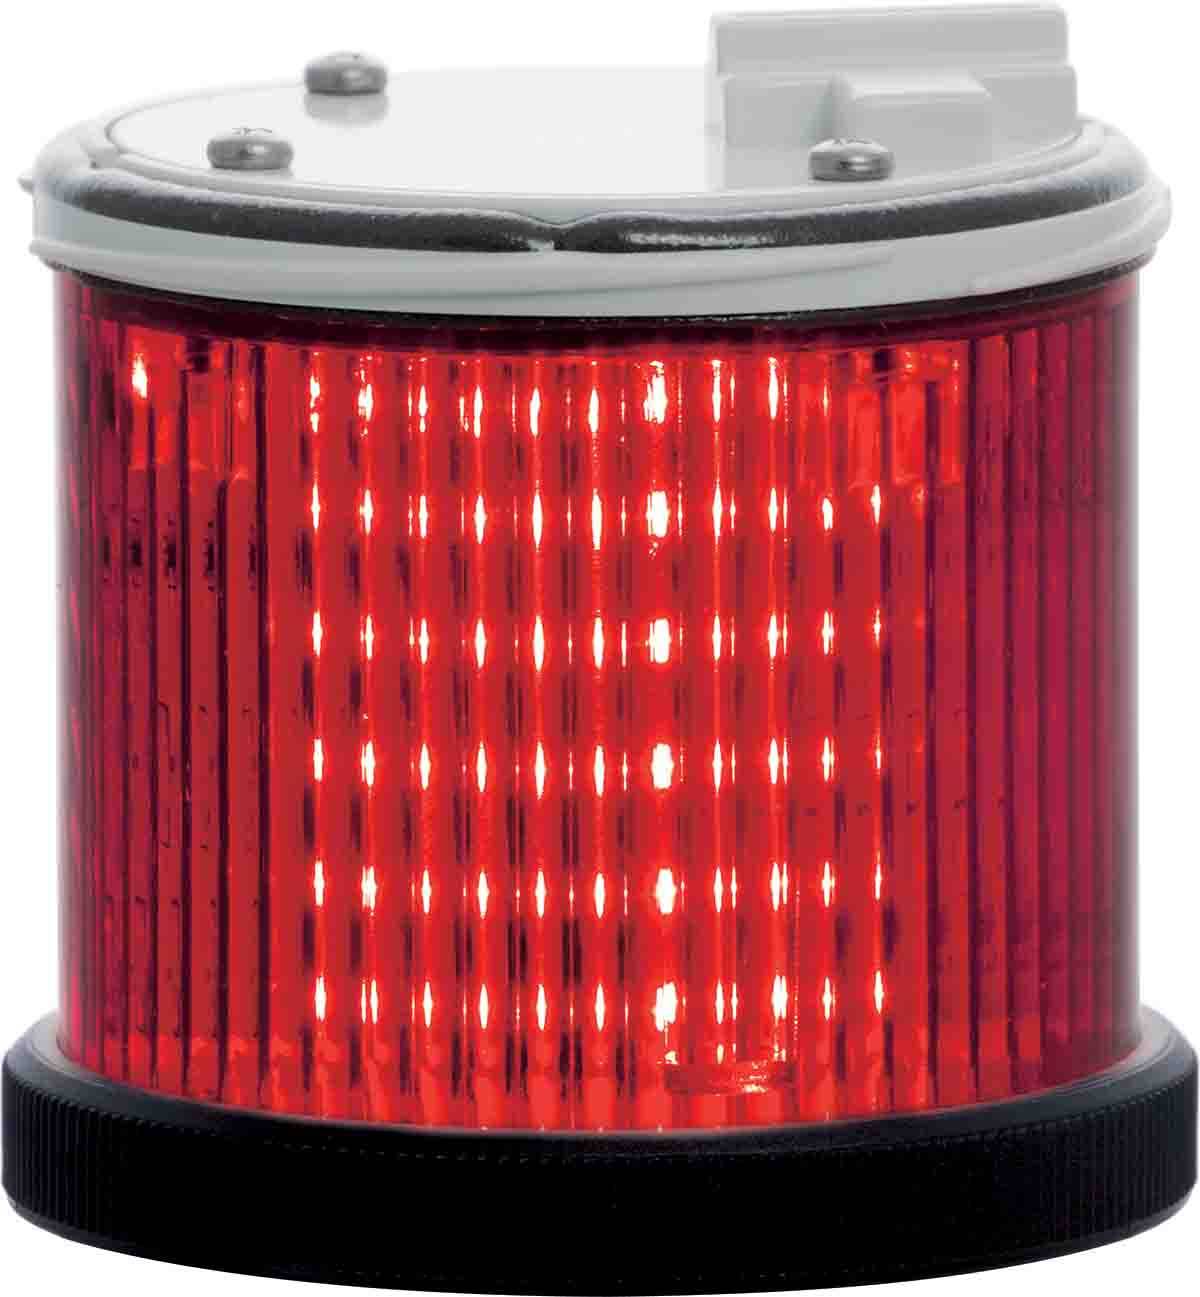 RS PRO, LED Blitz Signalleuchte Rot, 110 → 230 V ac, Ø 77mm x 45mm